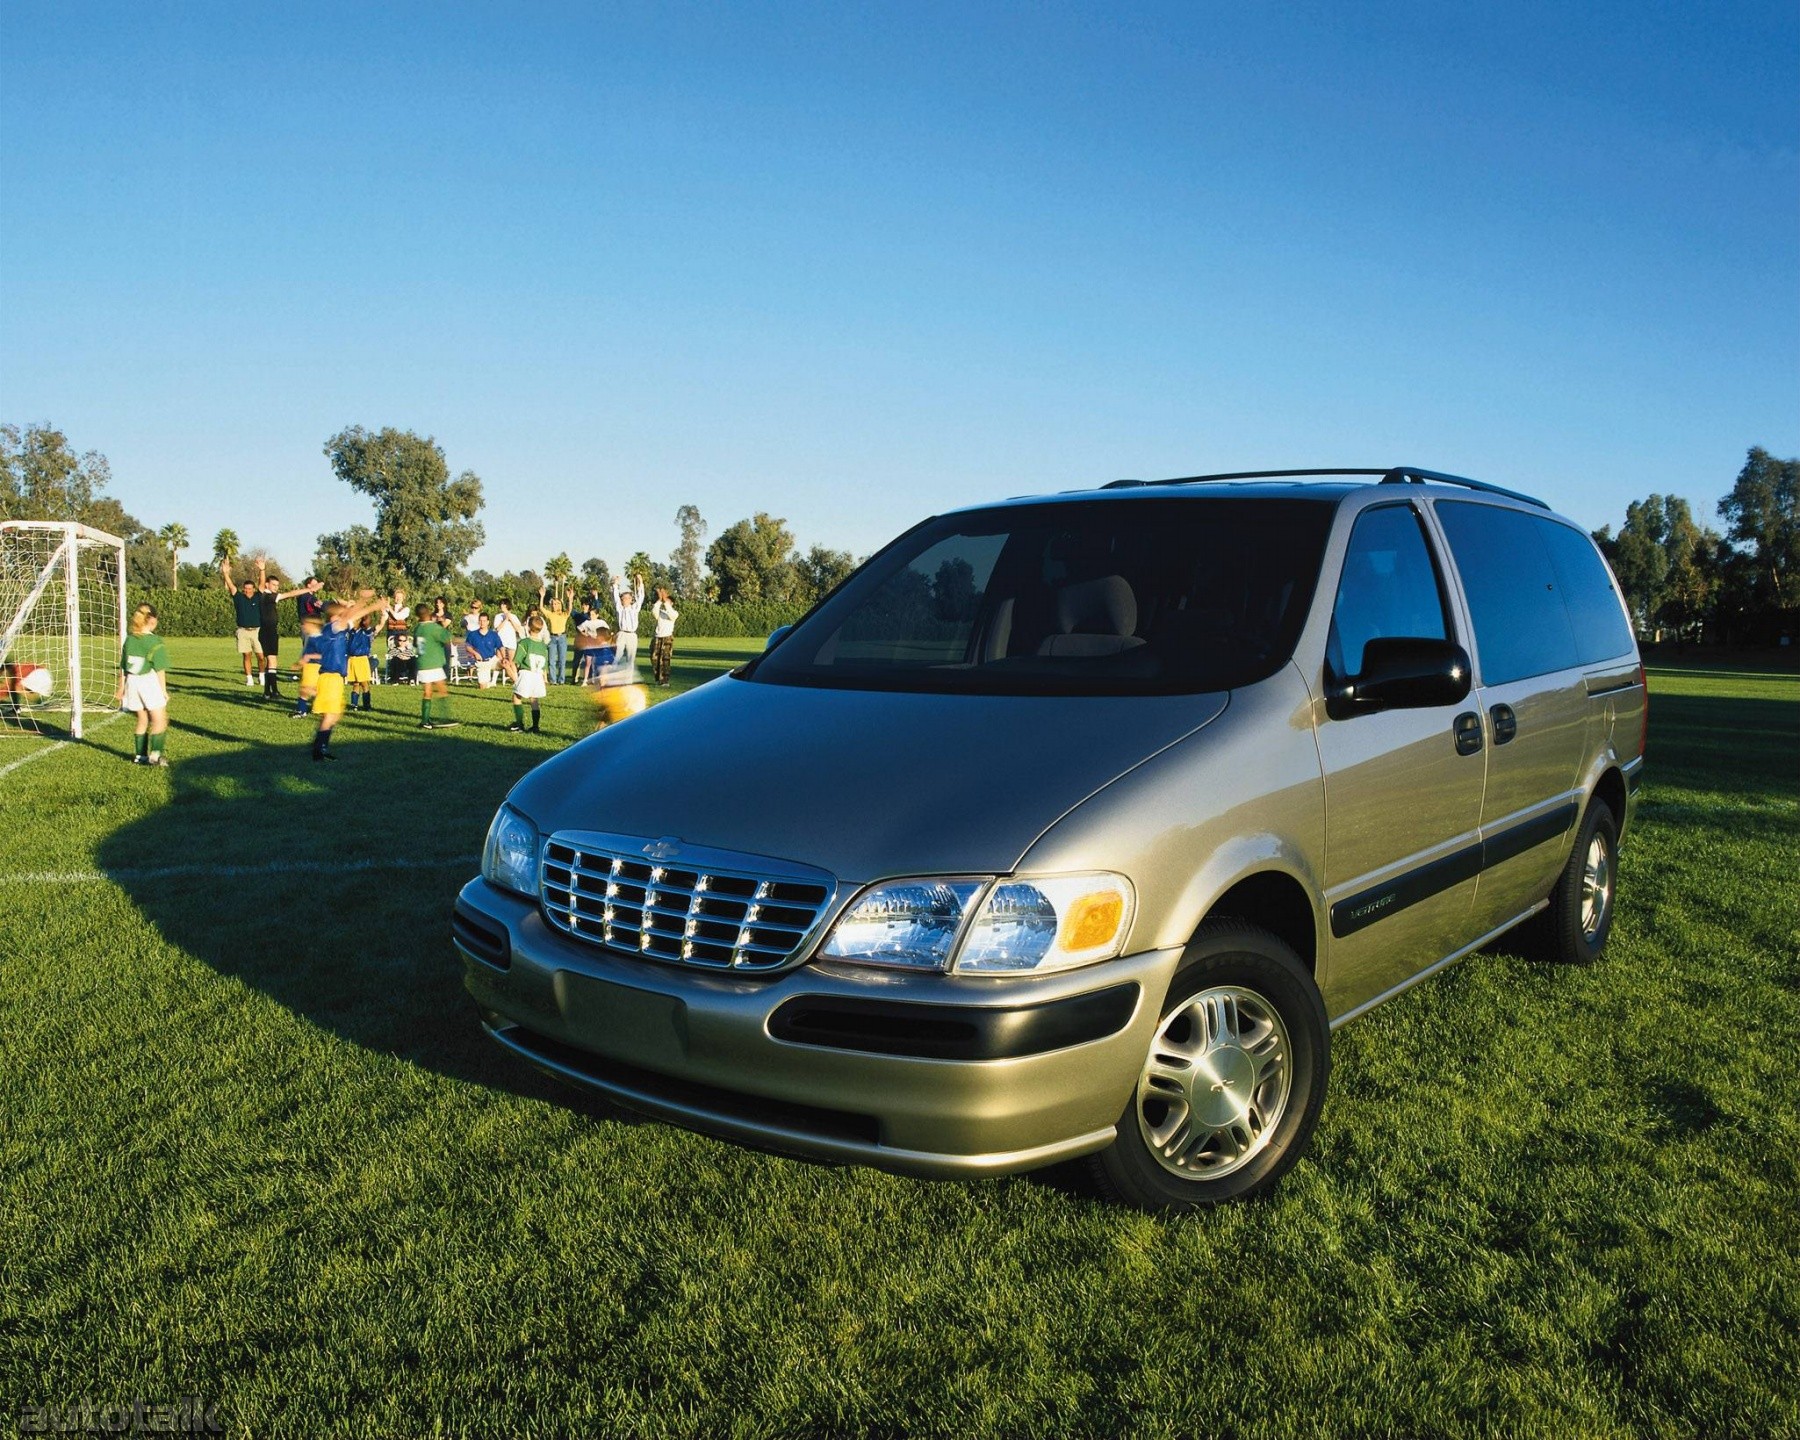 2000 Chevrolet Venture